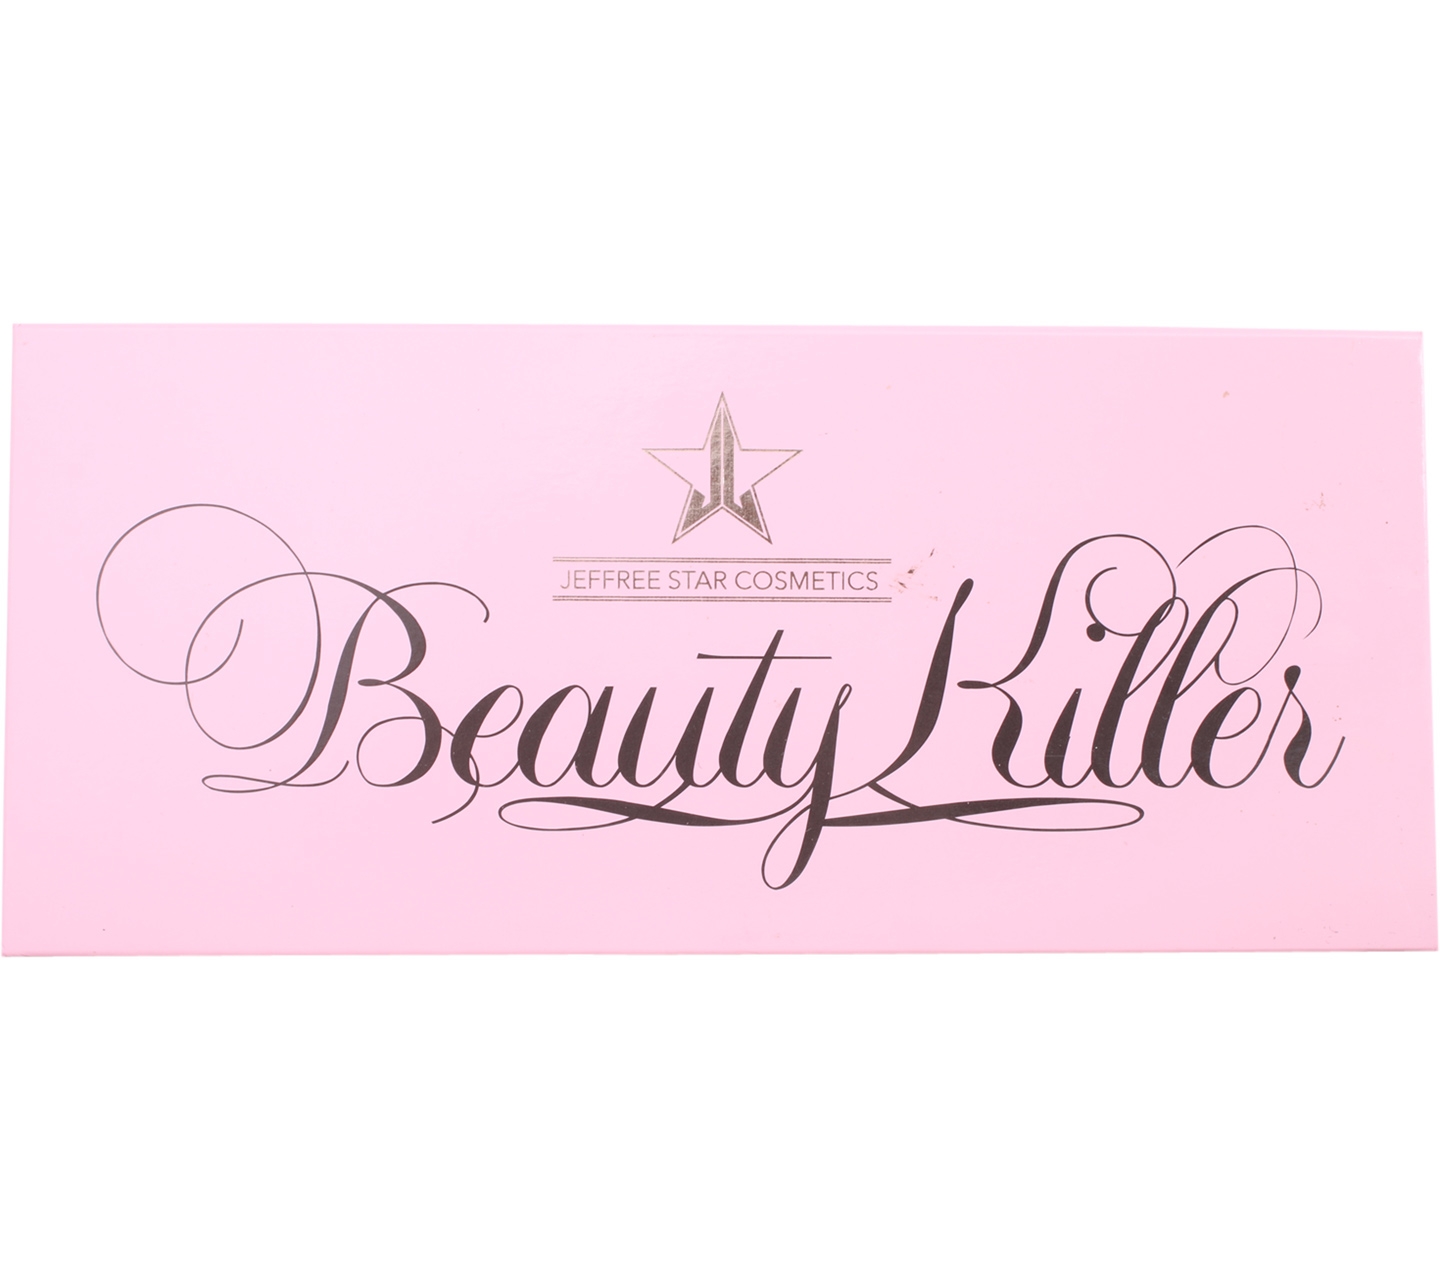 Jeffree Star Beauty Killer Sets and Palette